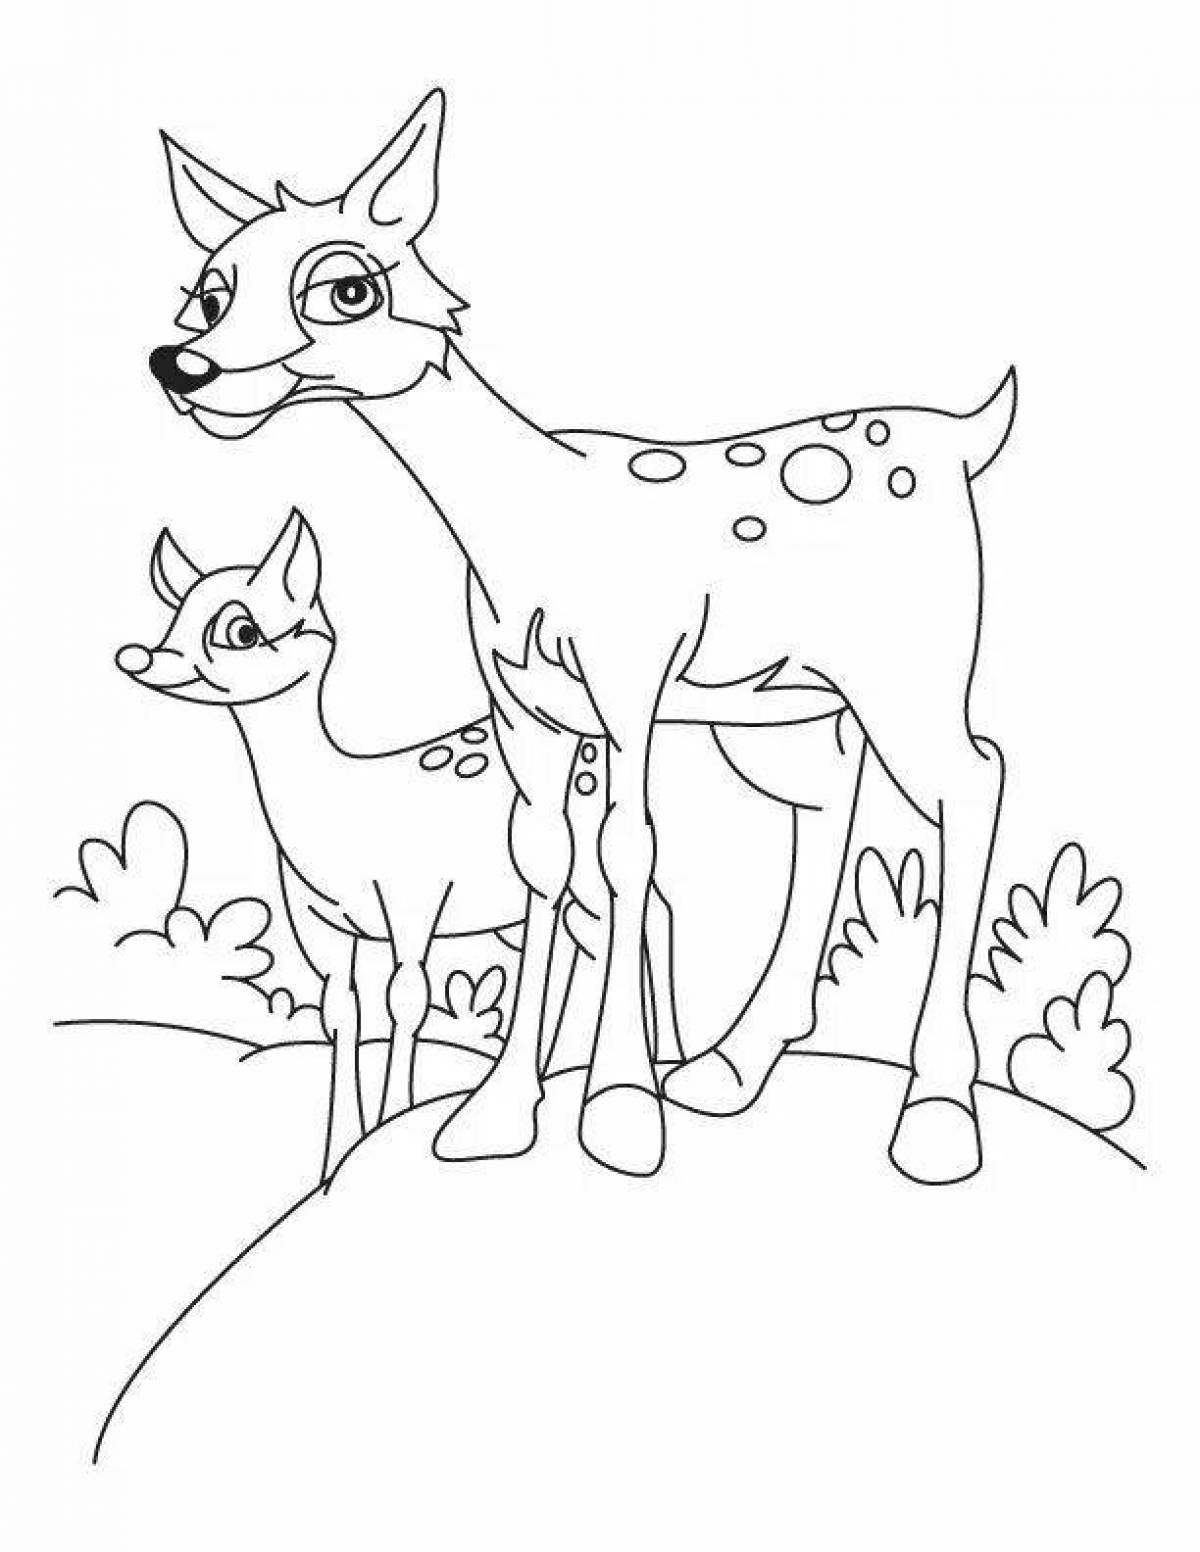 Coloring page graceful sika deer